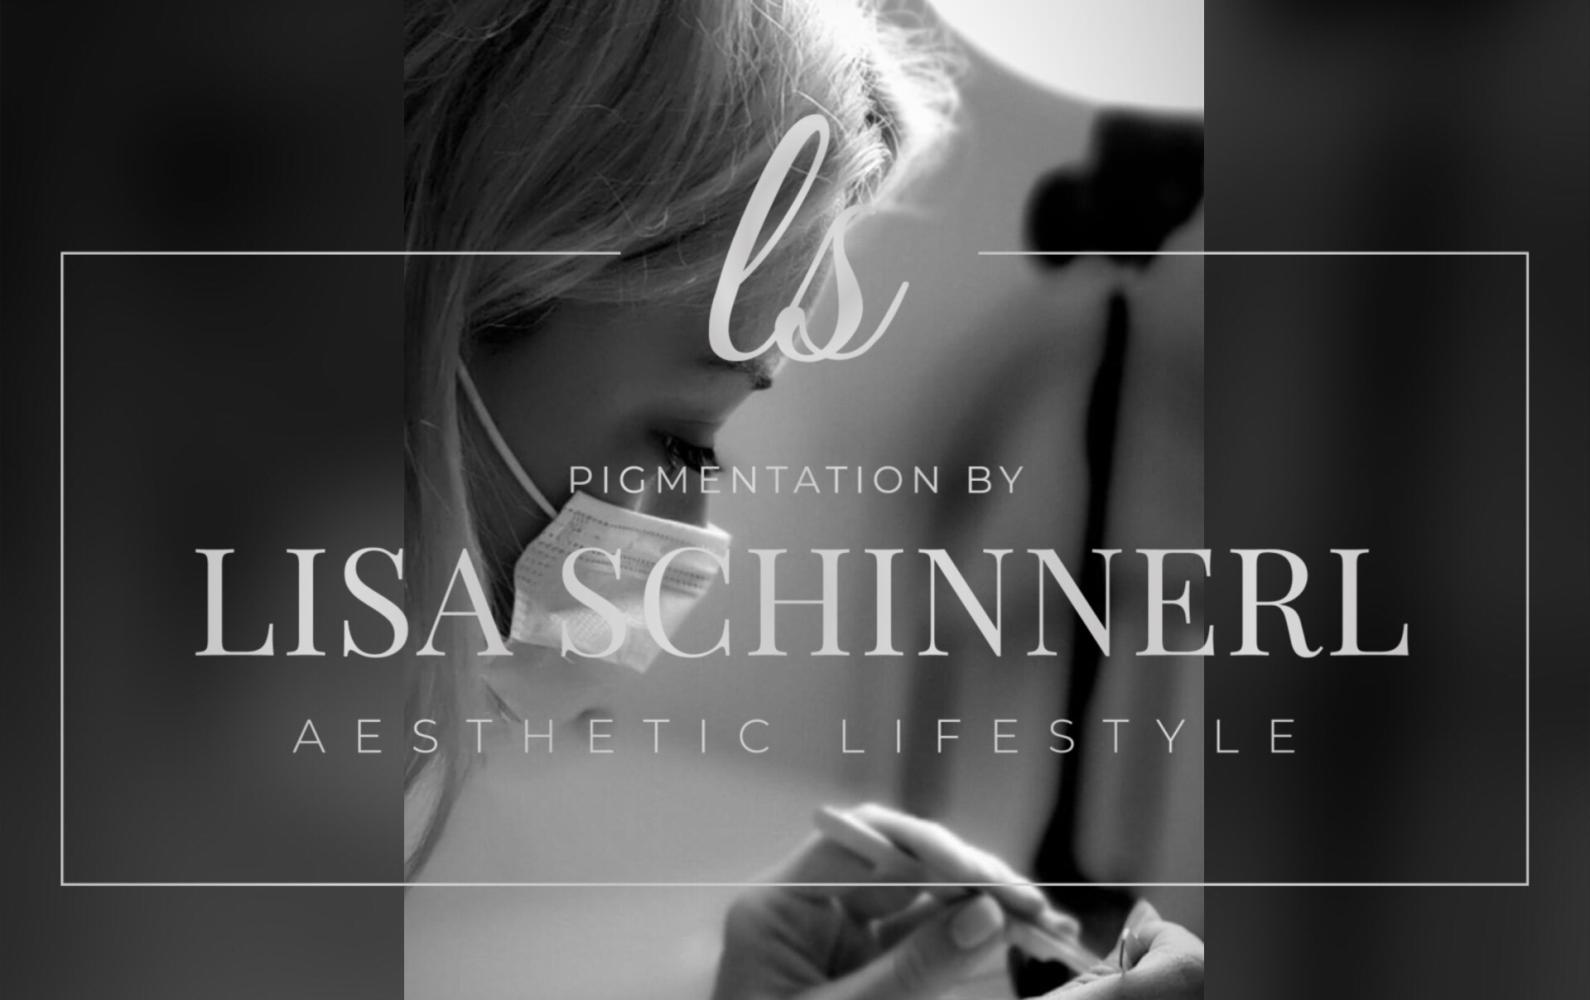 Aesthetic Lifestyle - Pigmentation by Lisa Schinnerl Headerbild